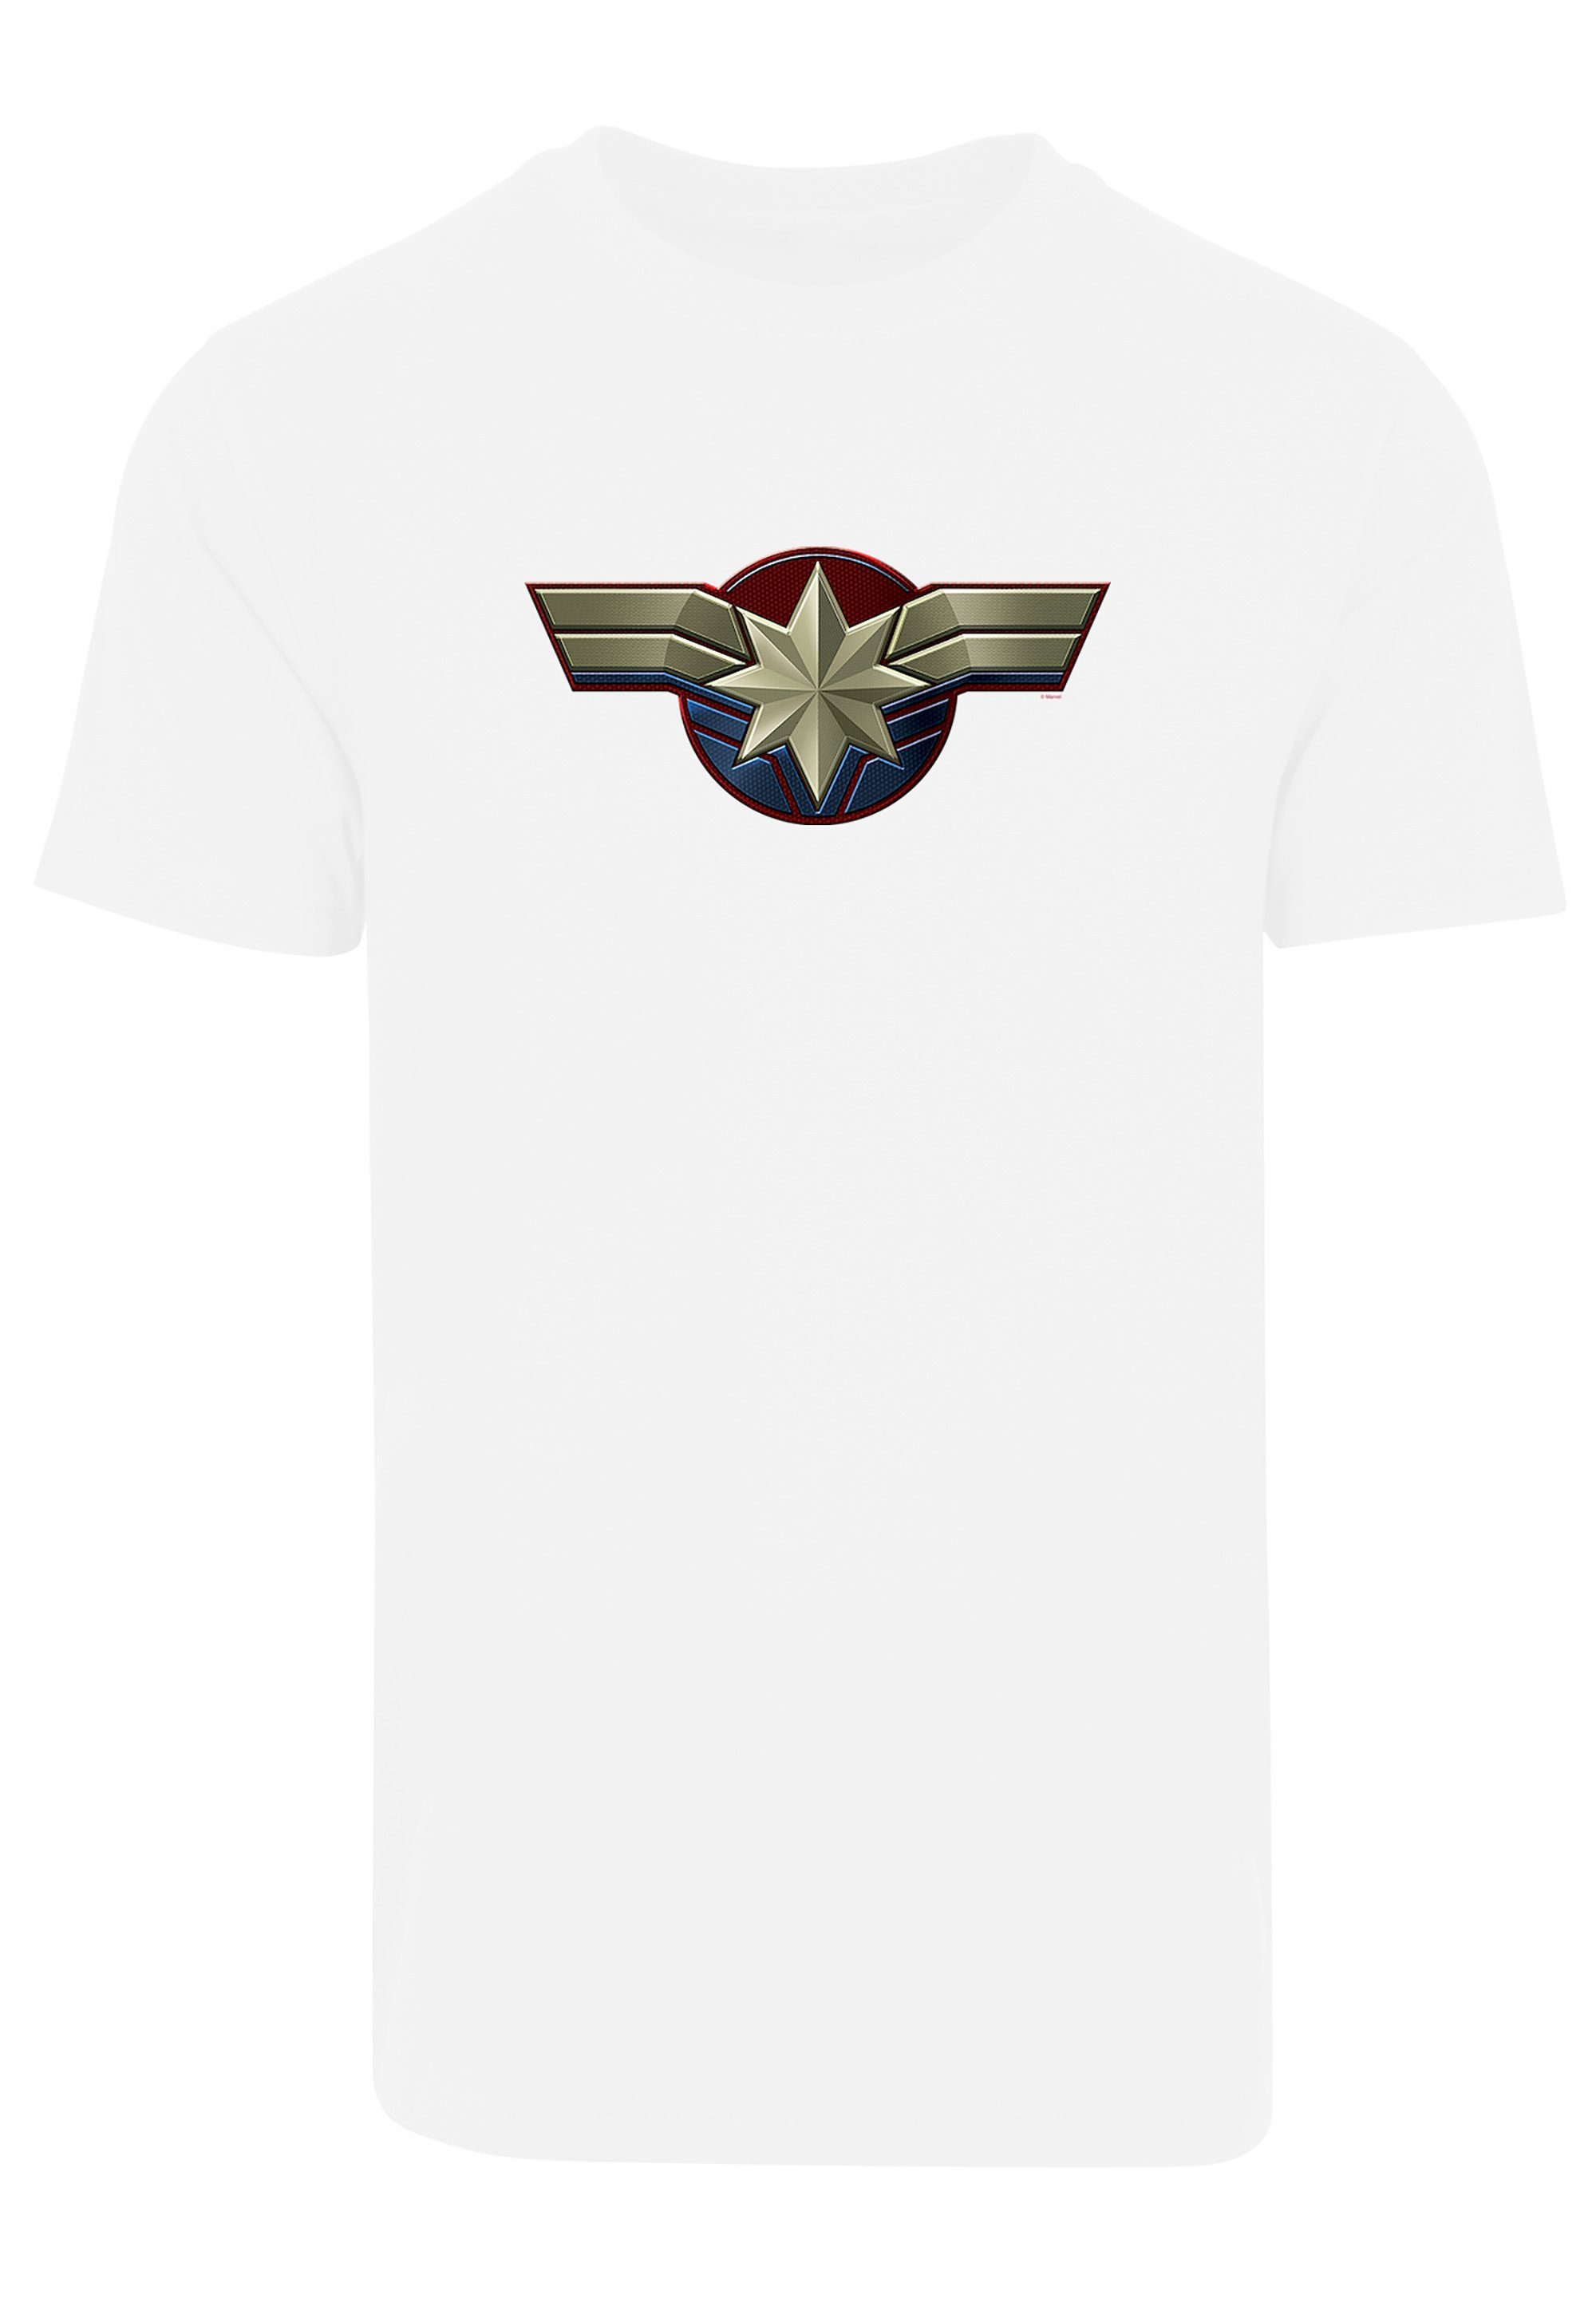 F4NT4STIC T-Shirt weiß Emblem Captain Print Marvel Chest Marvel